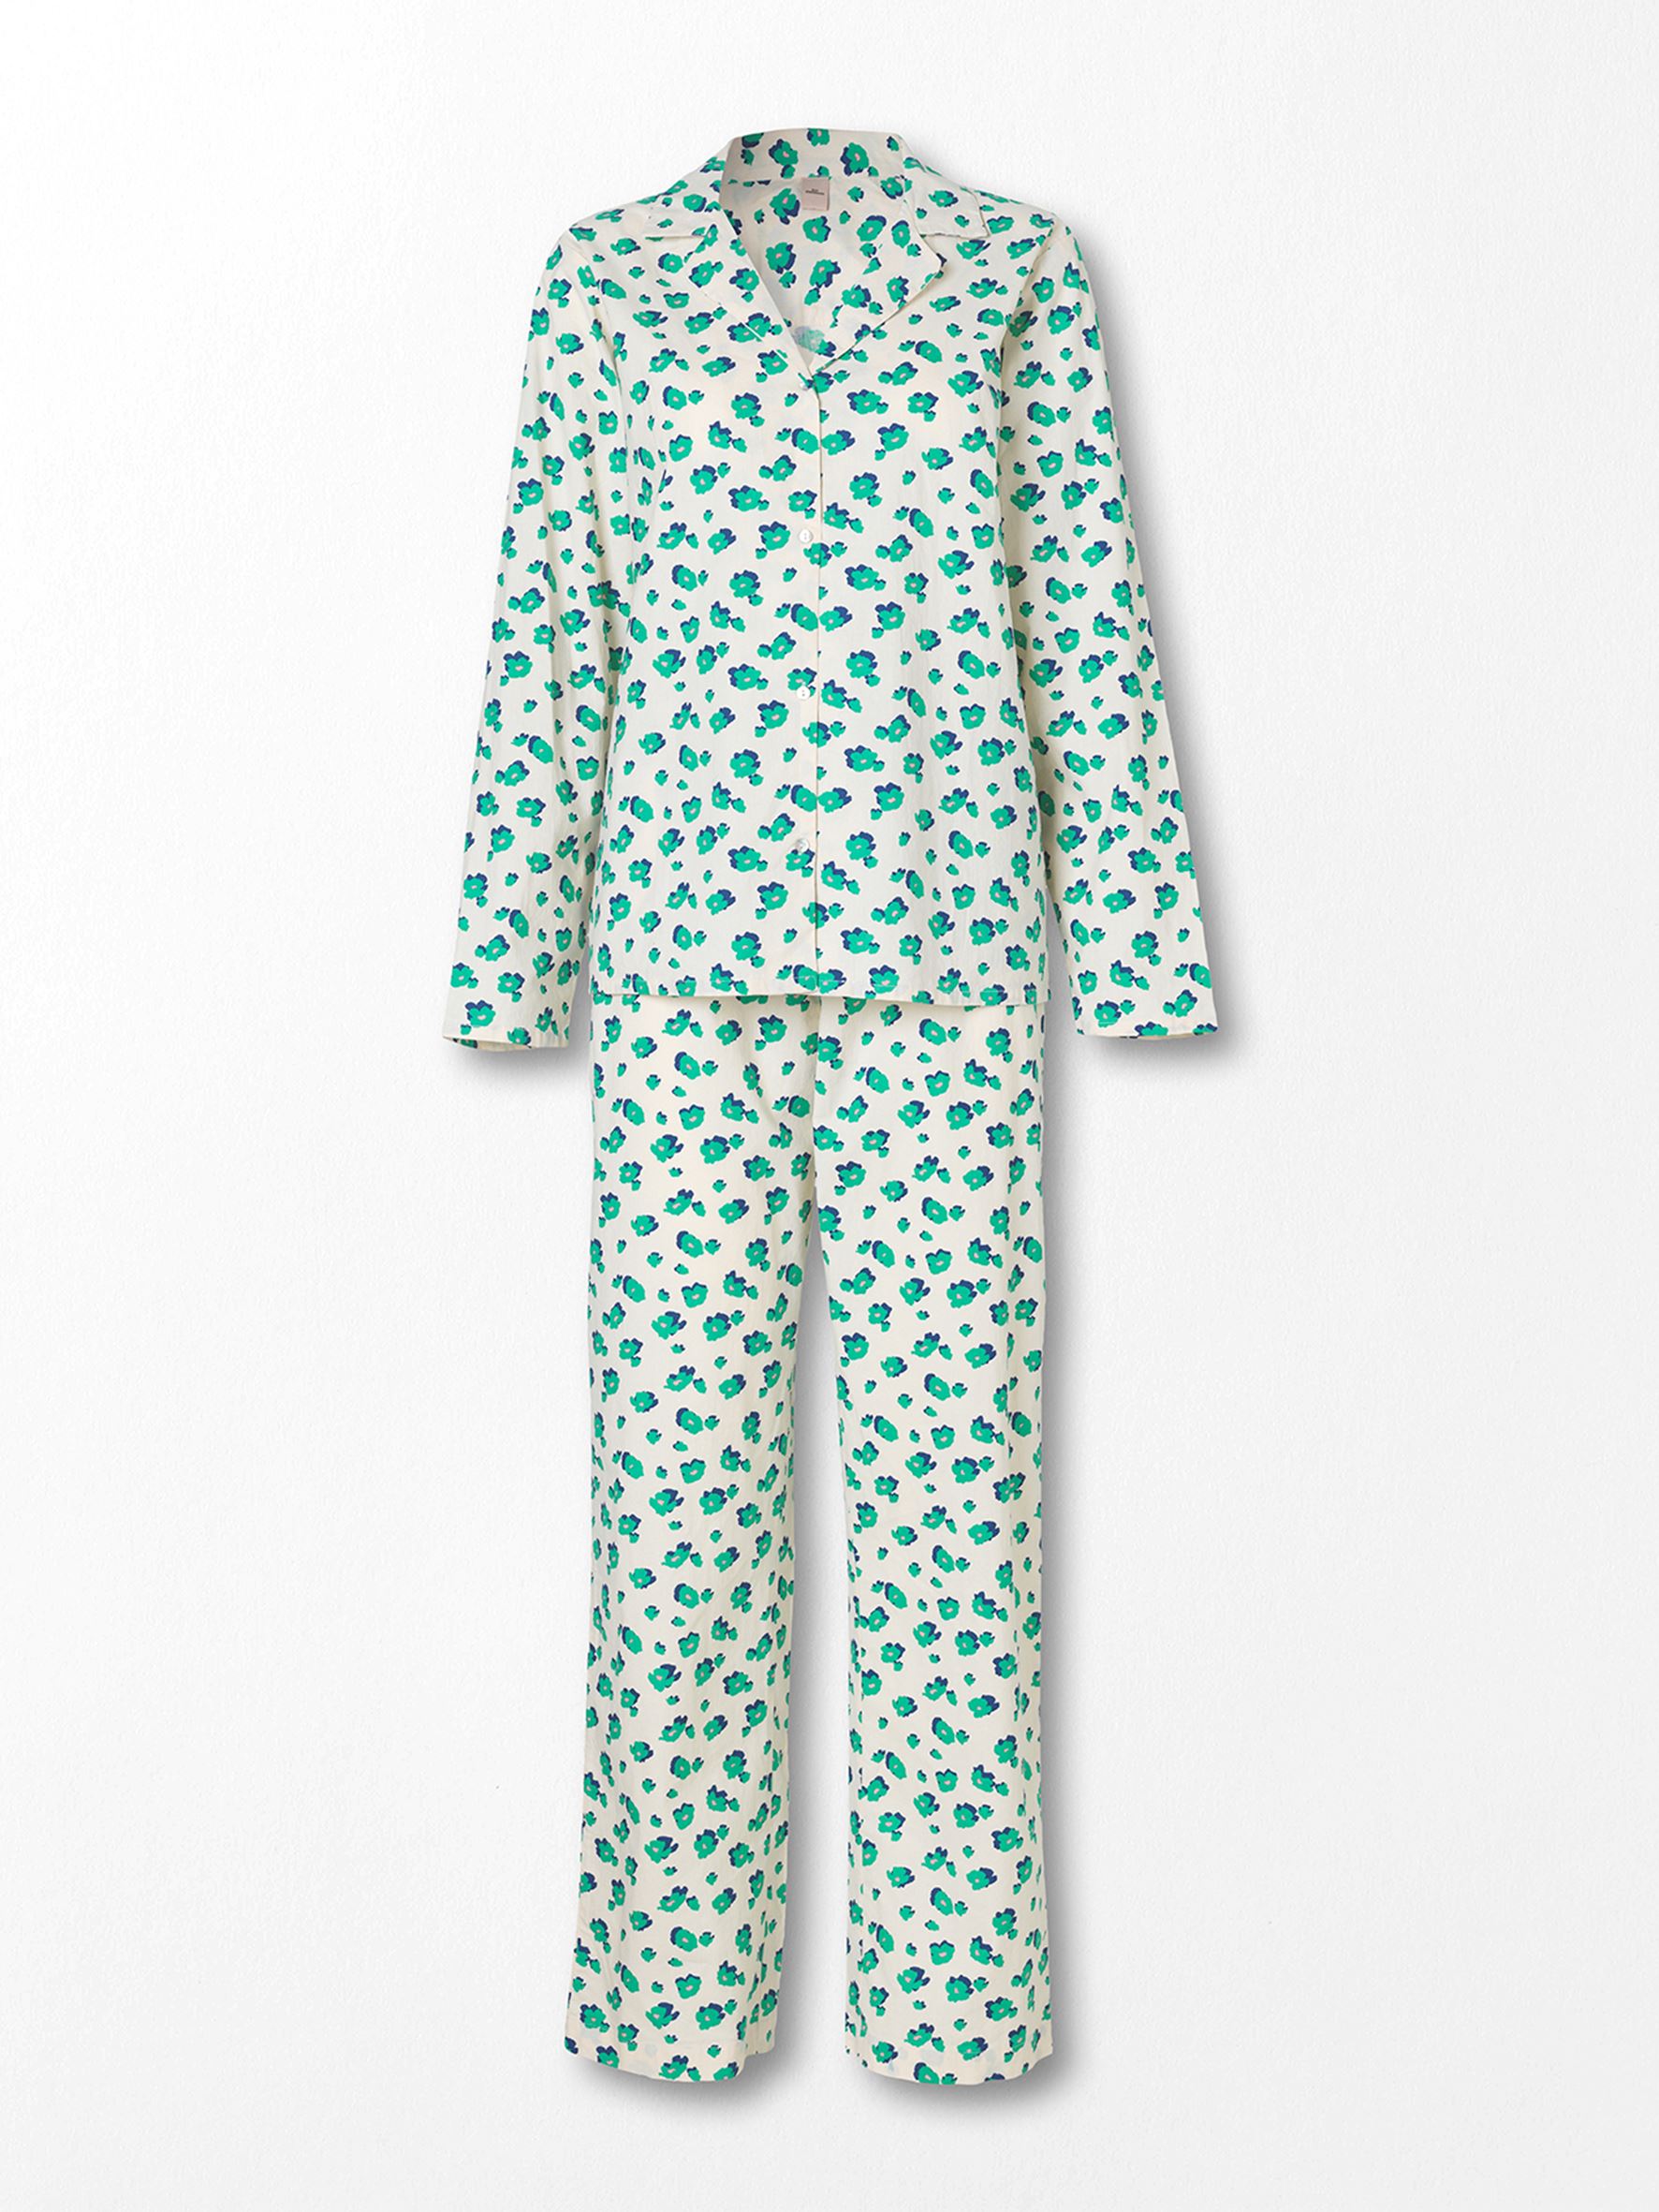 Amapoly Pyjamas Set Clothing   - Becksöndergaard